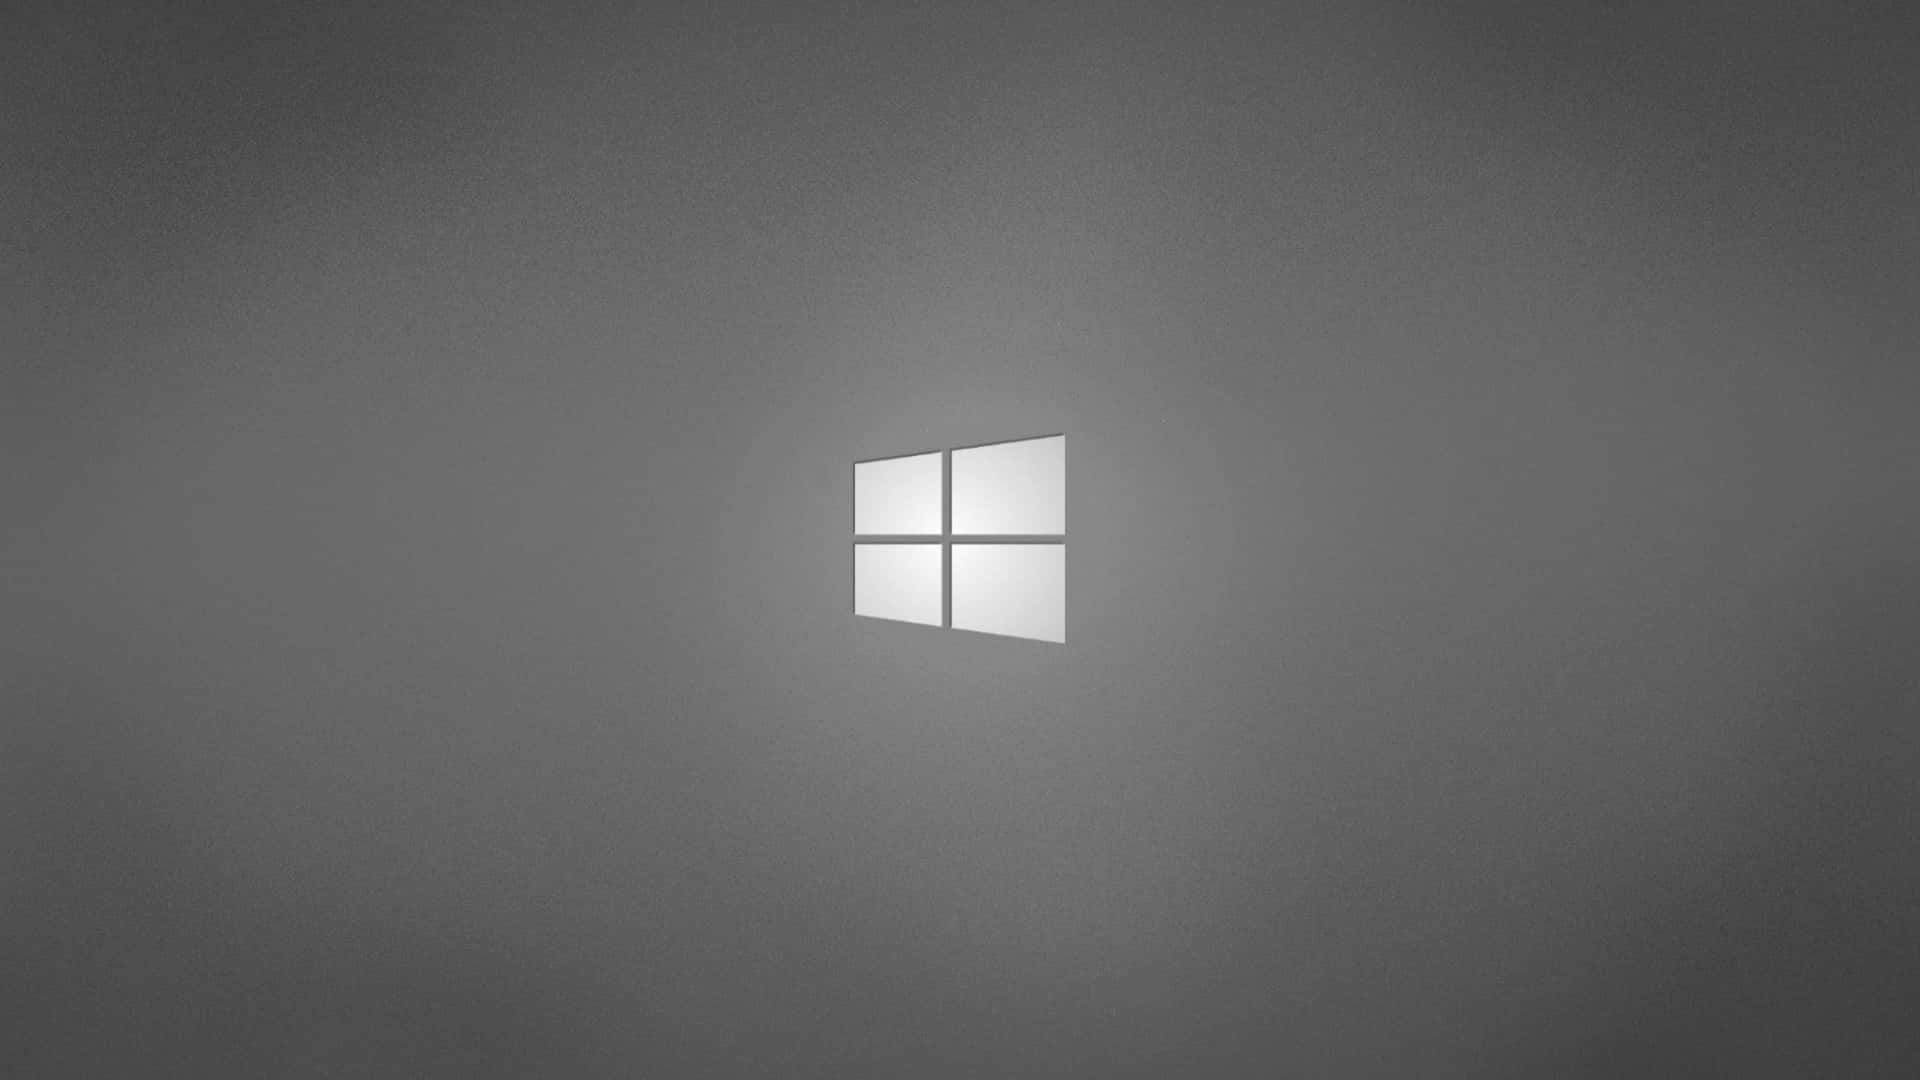 Windows 10 Logo In A Dark Room